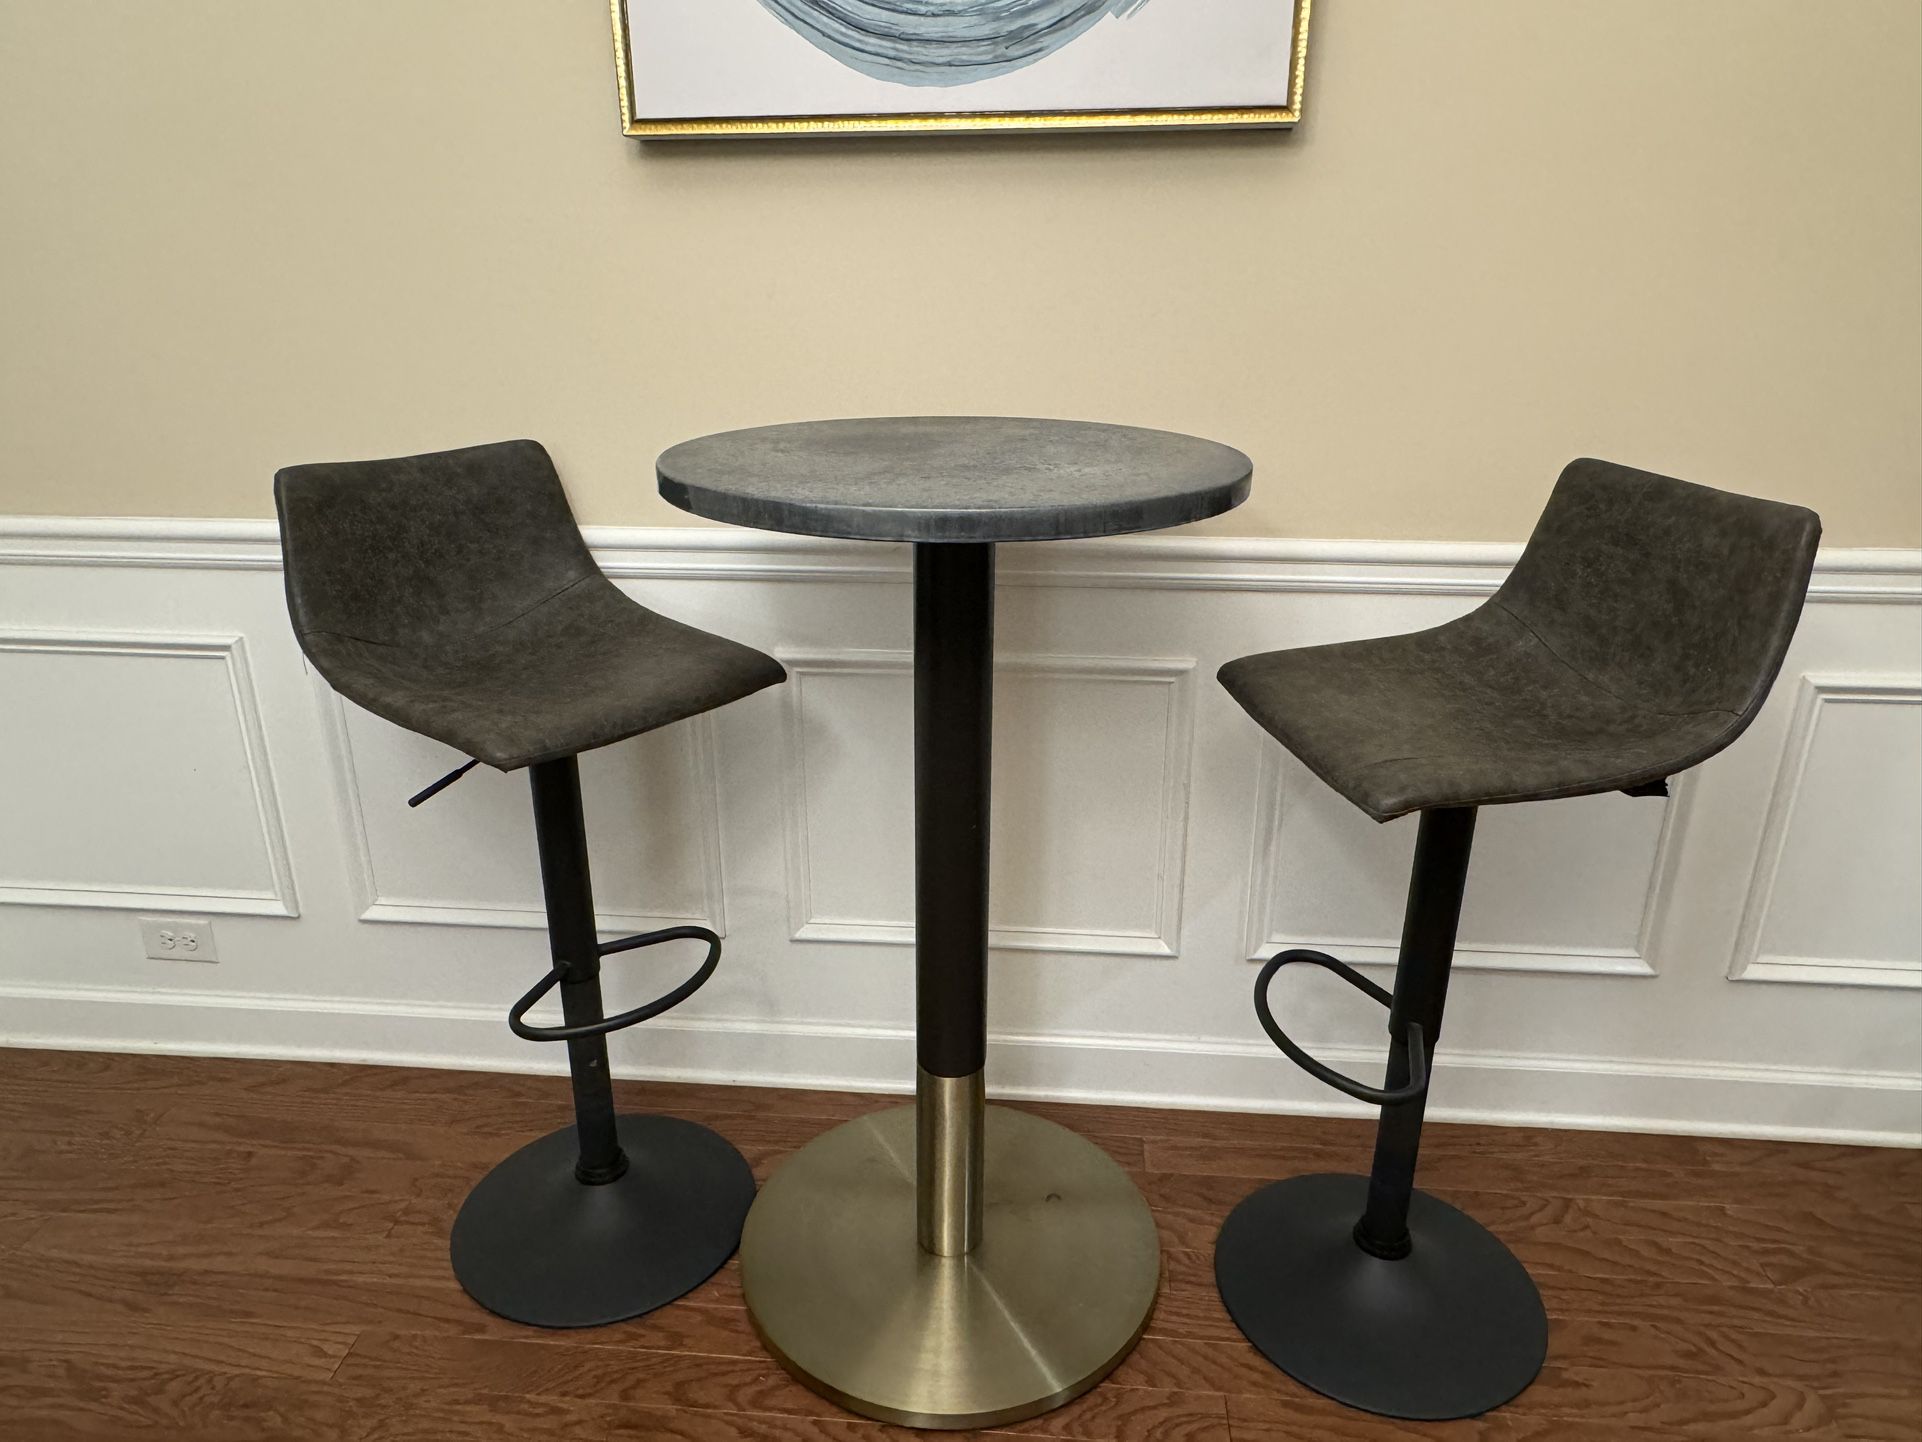 Modern Bar Table And stools